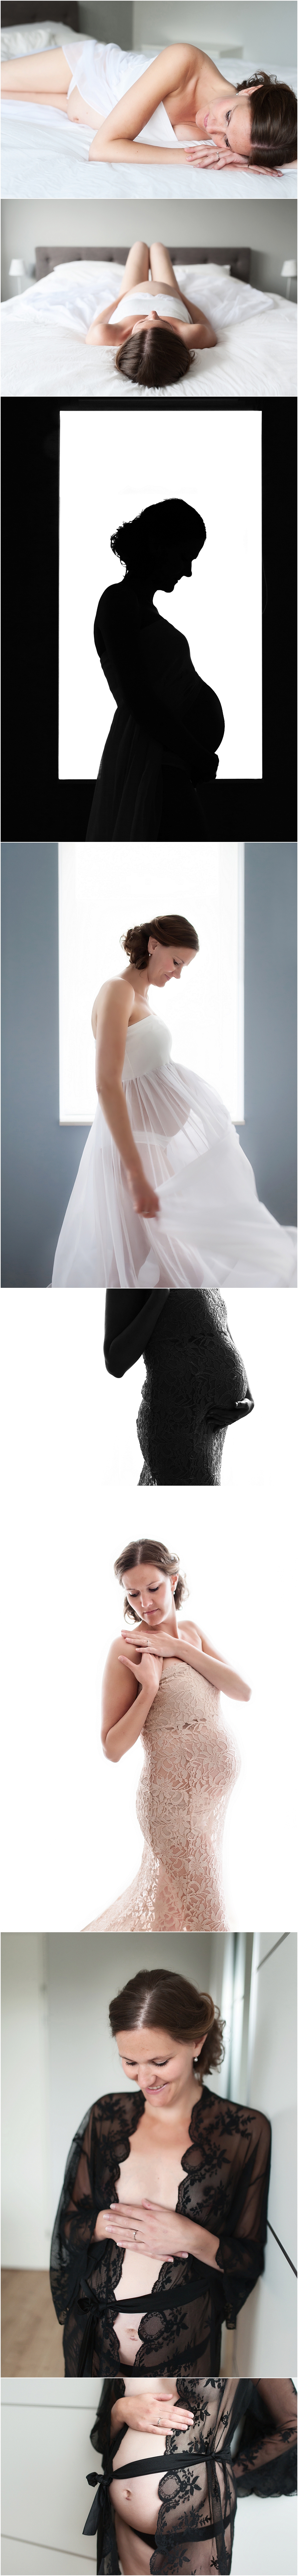 Marloes 37 weken zwanger - Zwanger fotografie Huissen